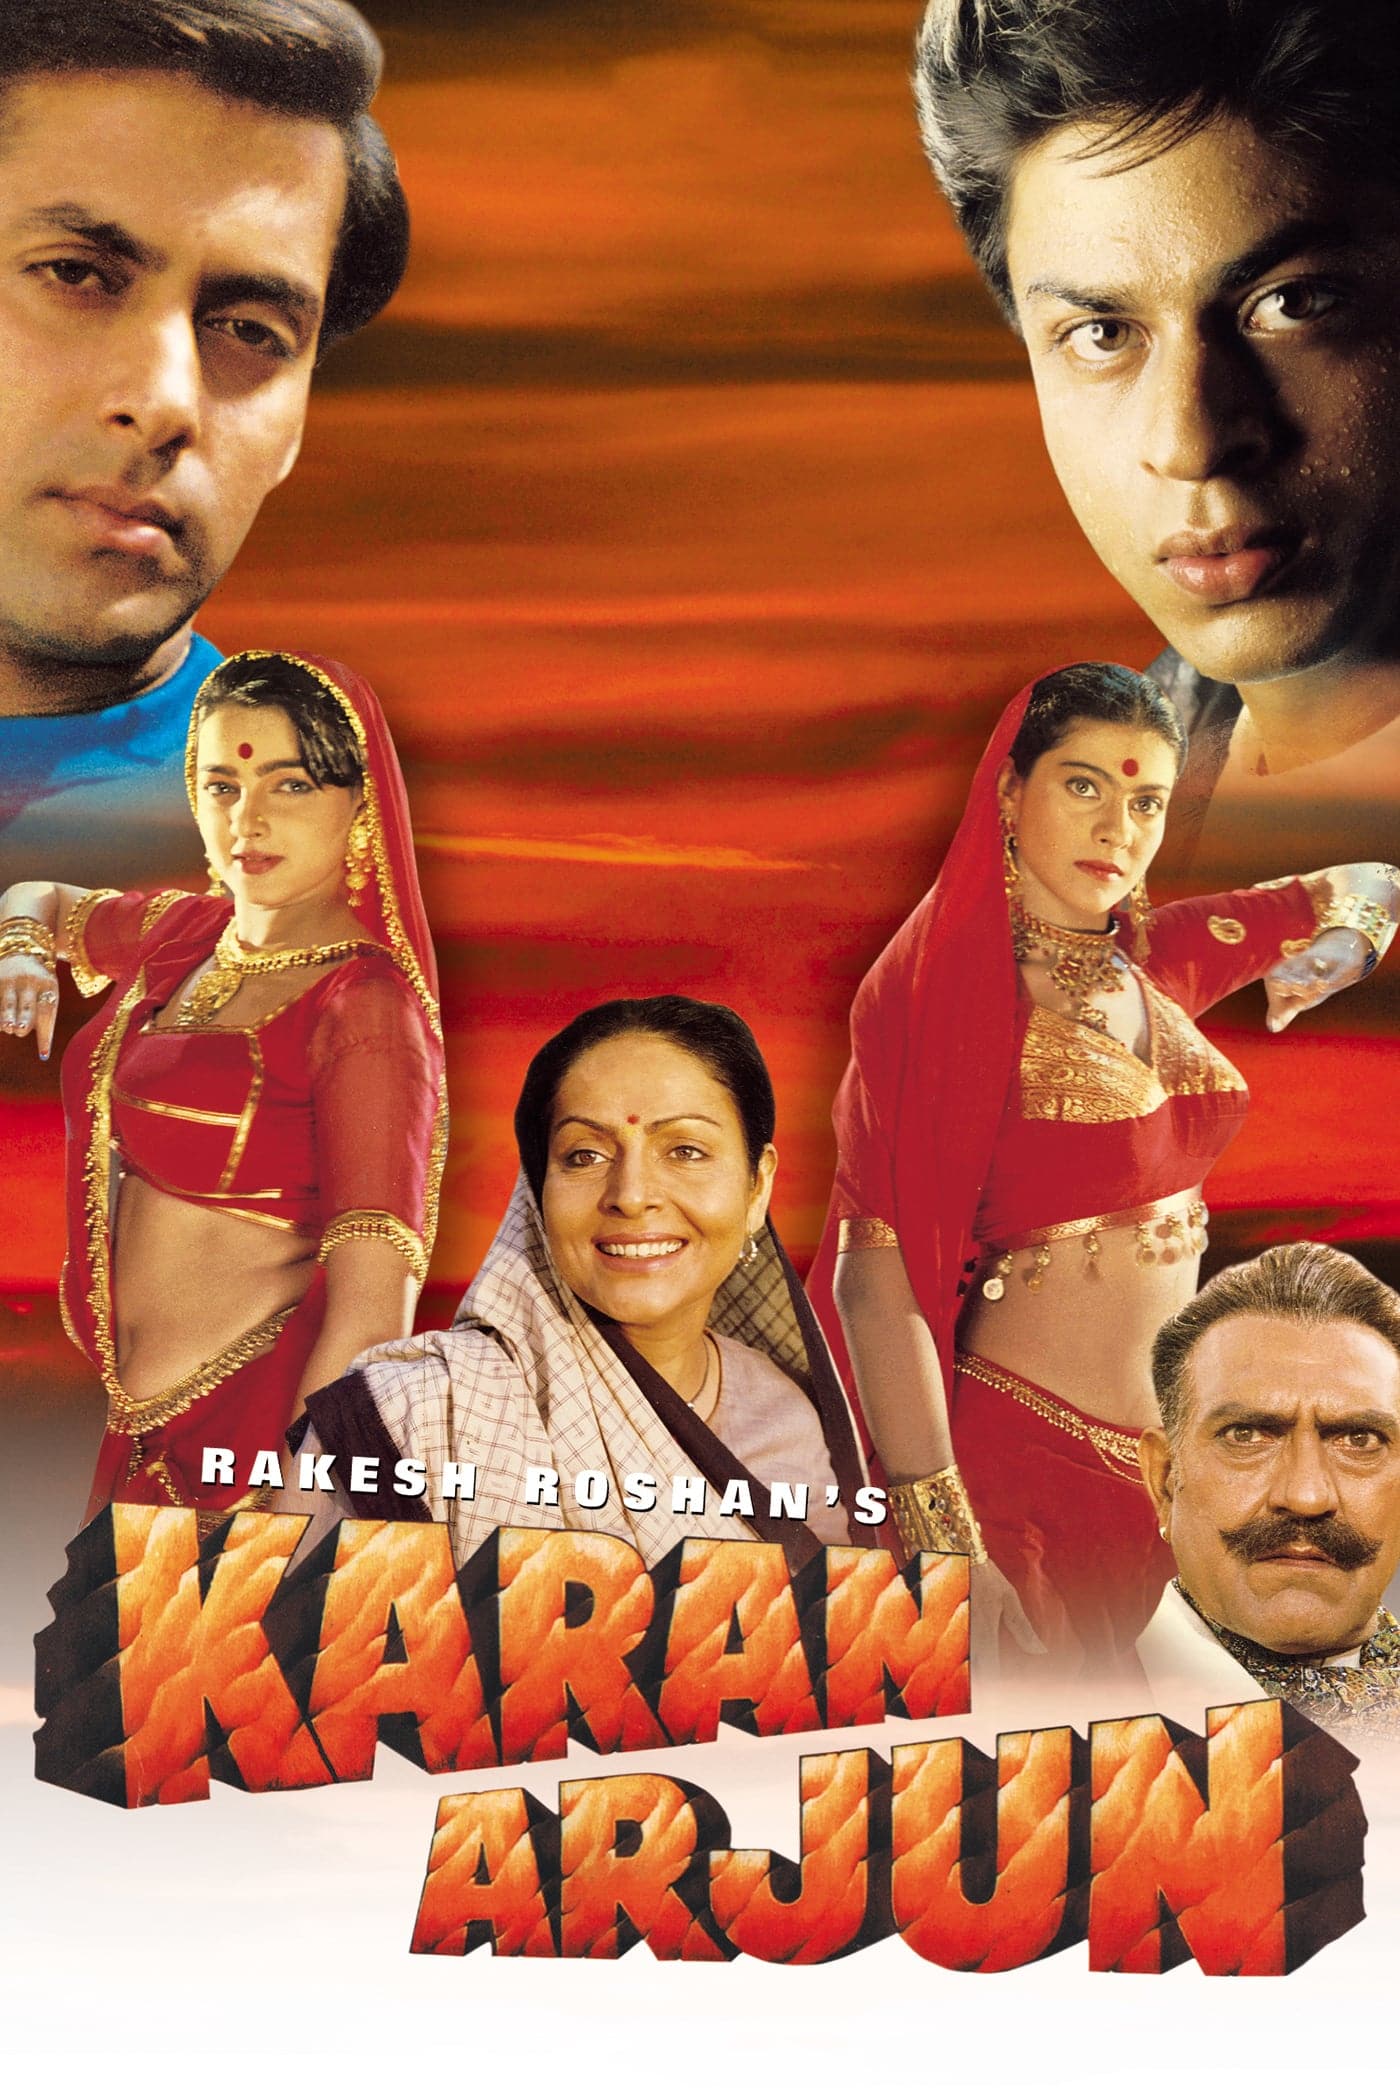 Poster for the movie "Karan Arjun"